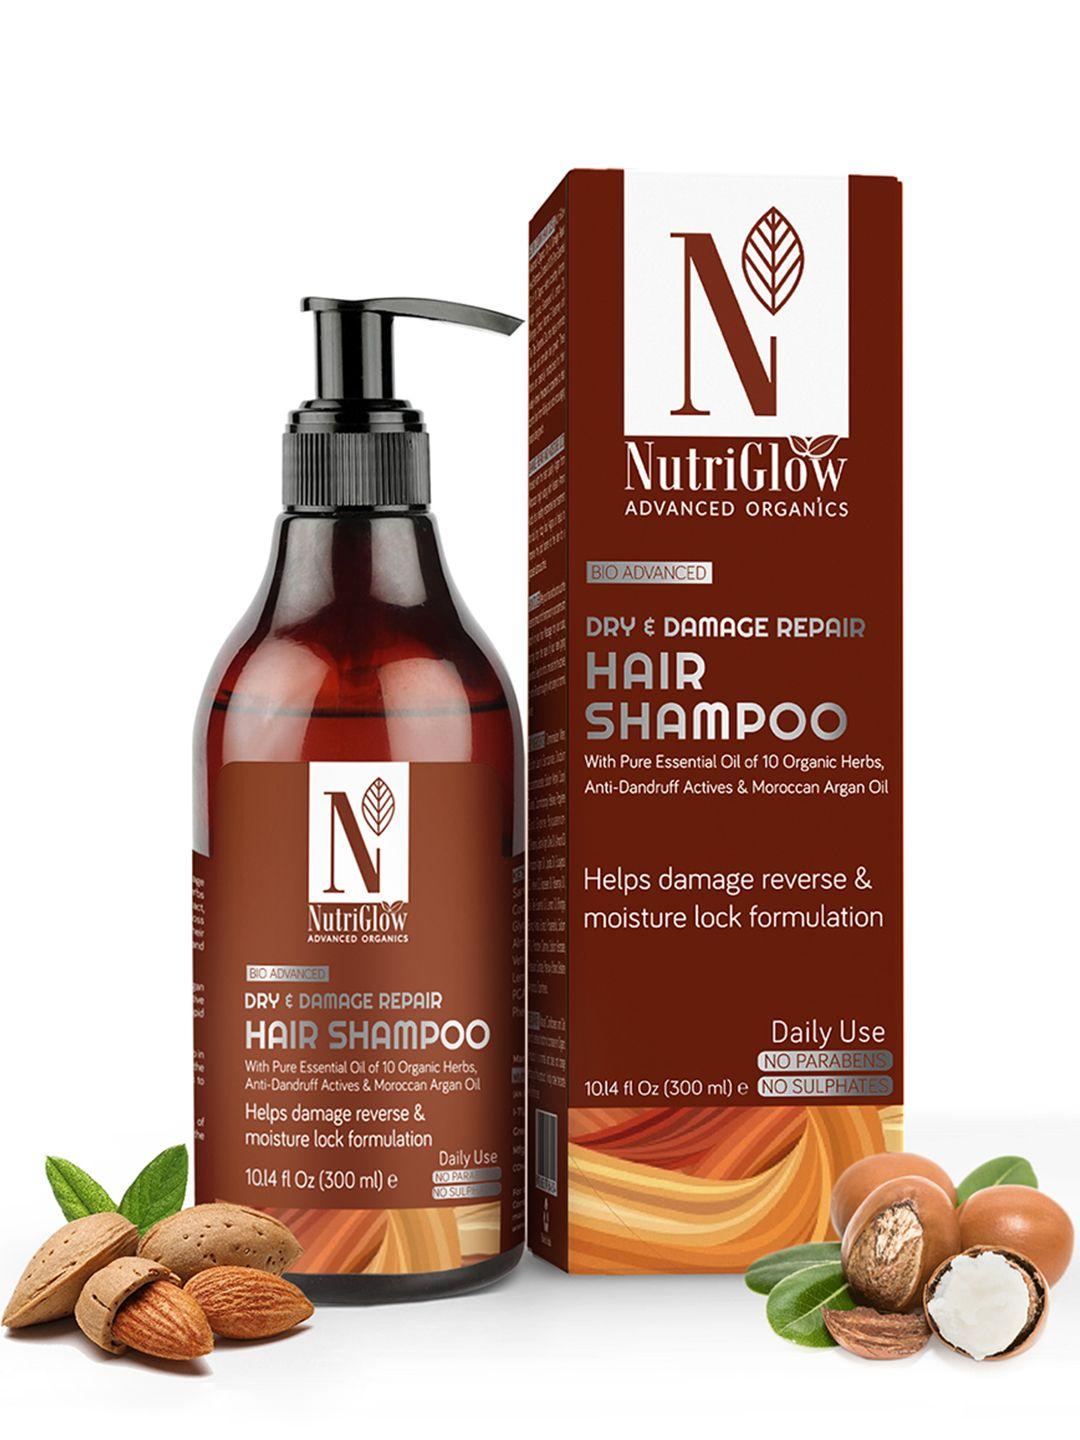 nutriglow advanced organics sustainable bio advanced dry & damage repair hair shampoo 300 ml